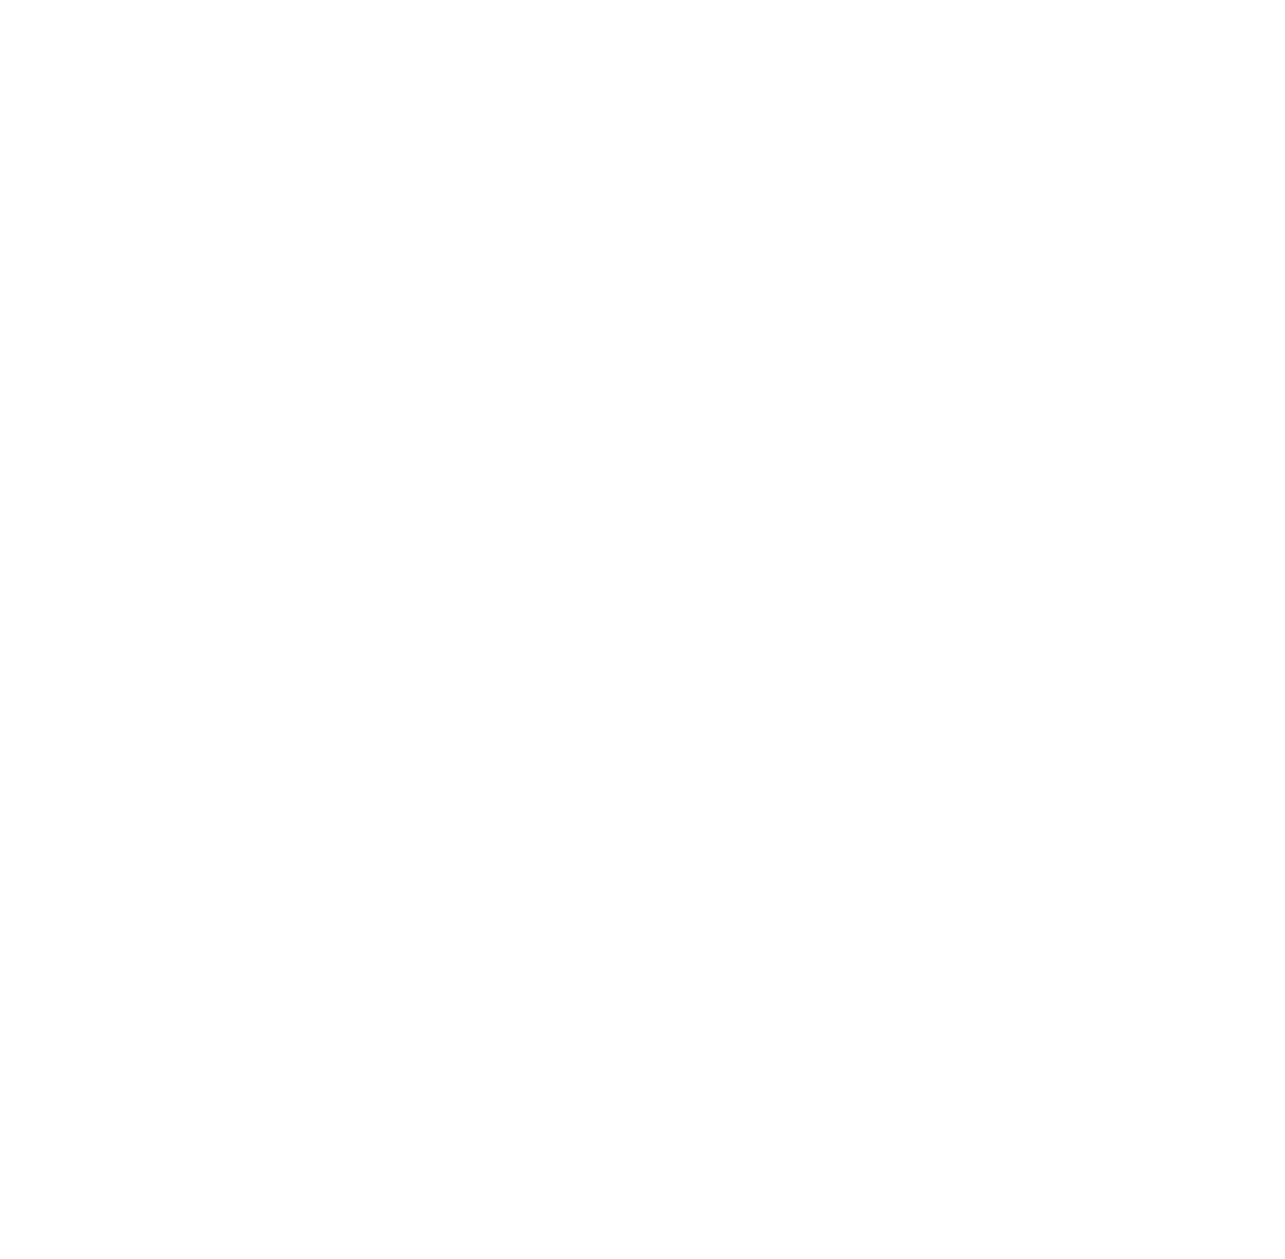 Bats Need Us